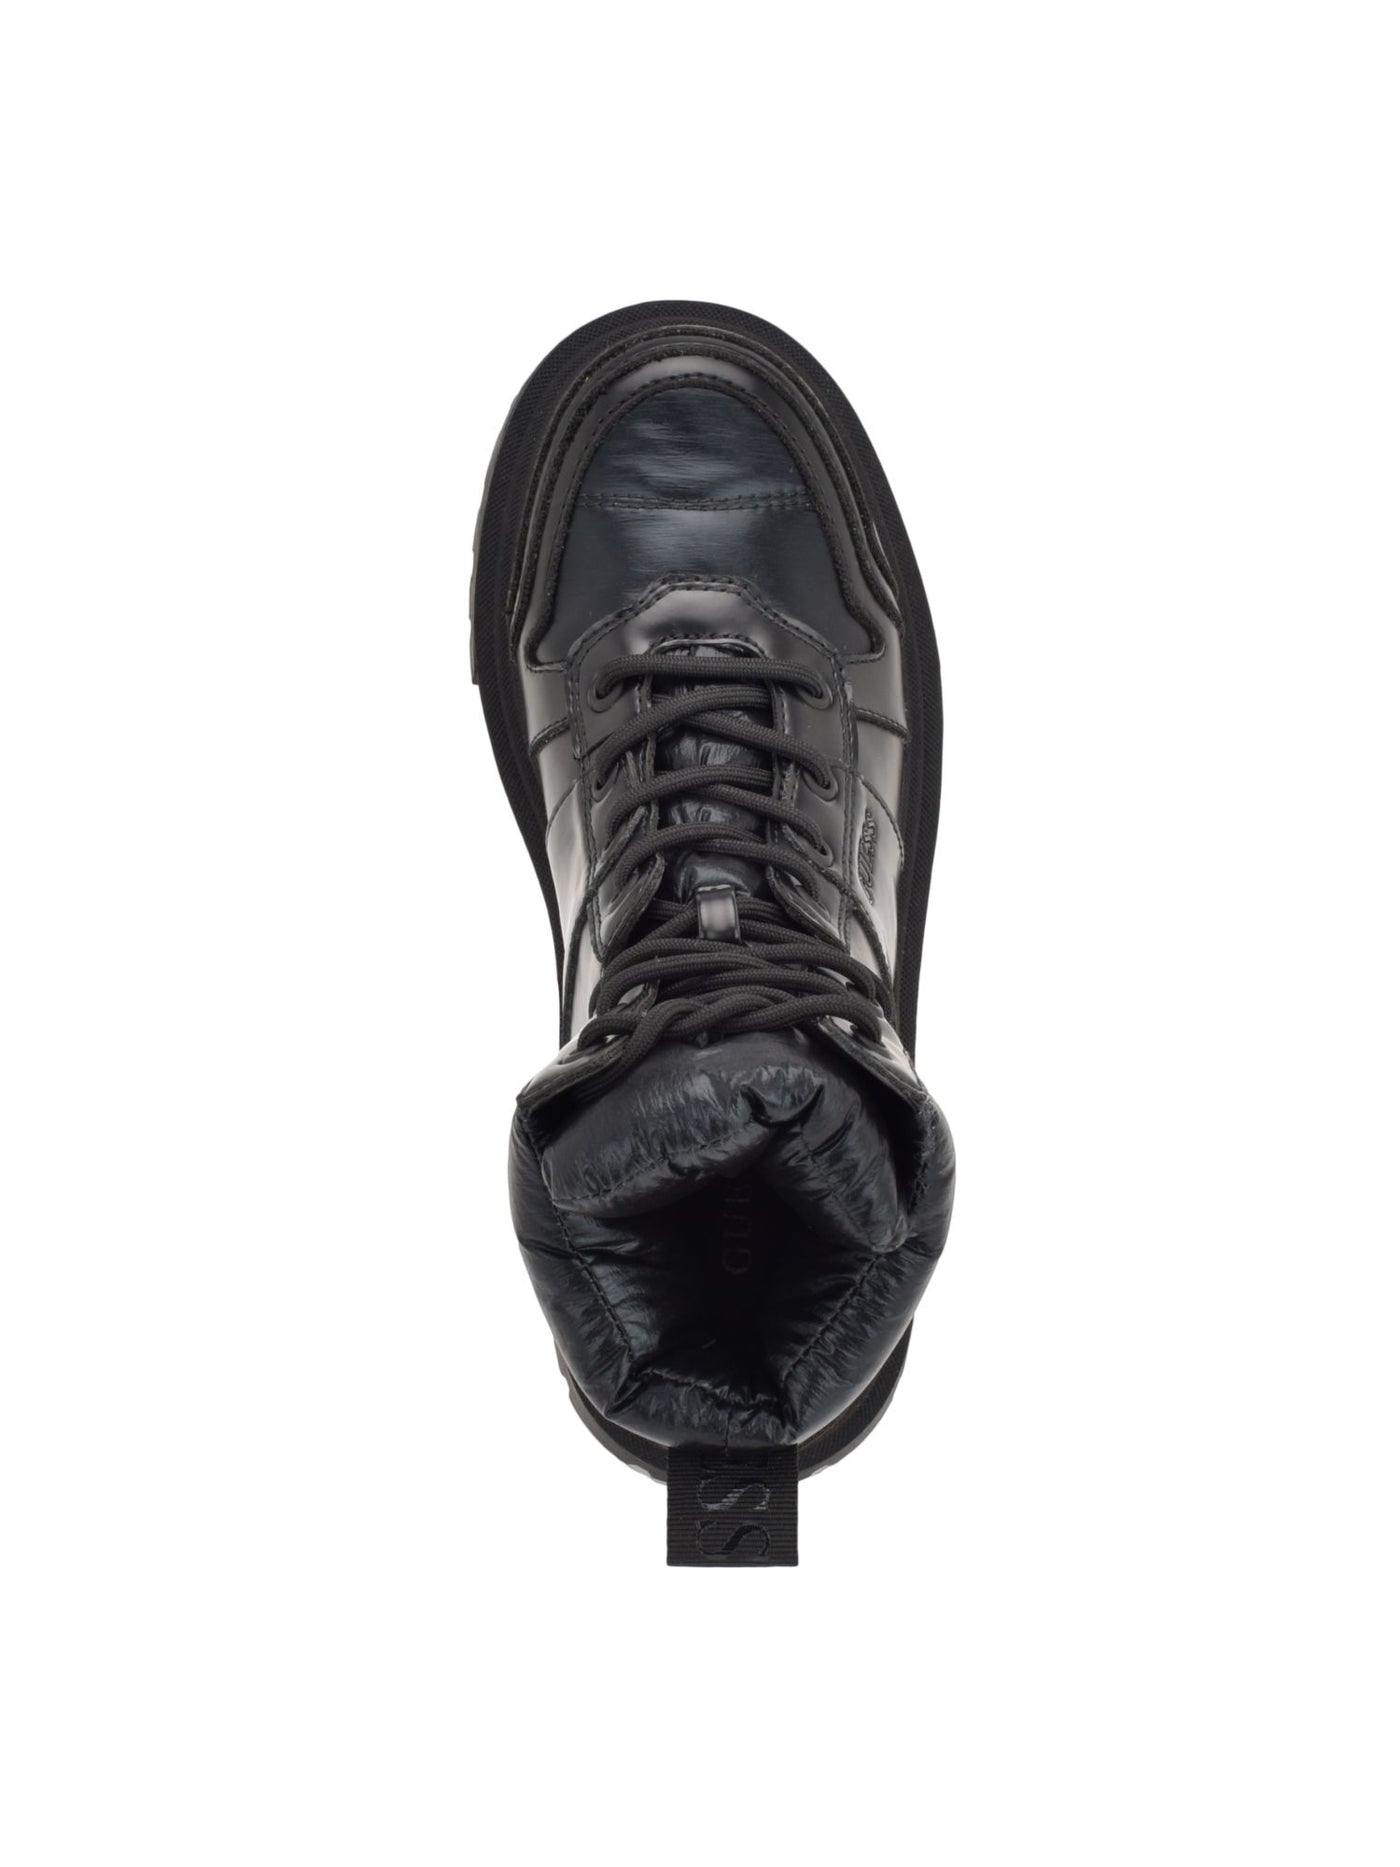 GUESS Womens Black 1" Platform Back Pull-Tab Lug Sole Padded Tisley Round Toe Block Heel Lace-Up Combat Boots 6 M